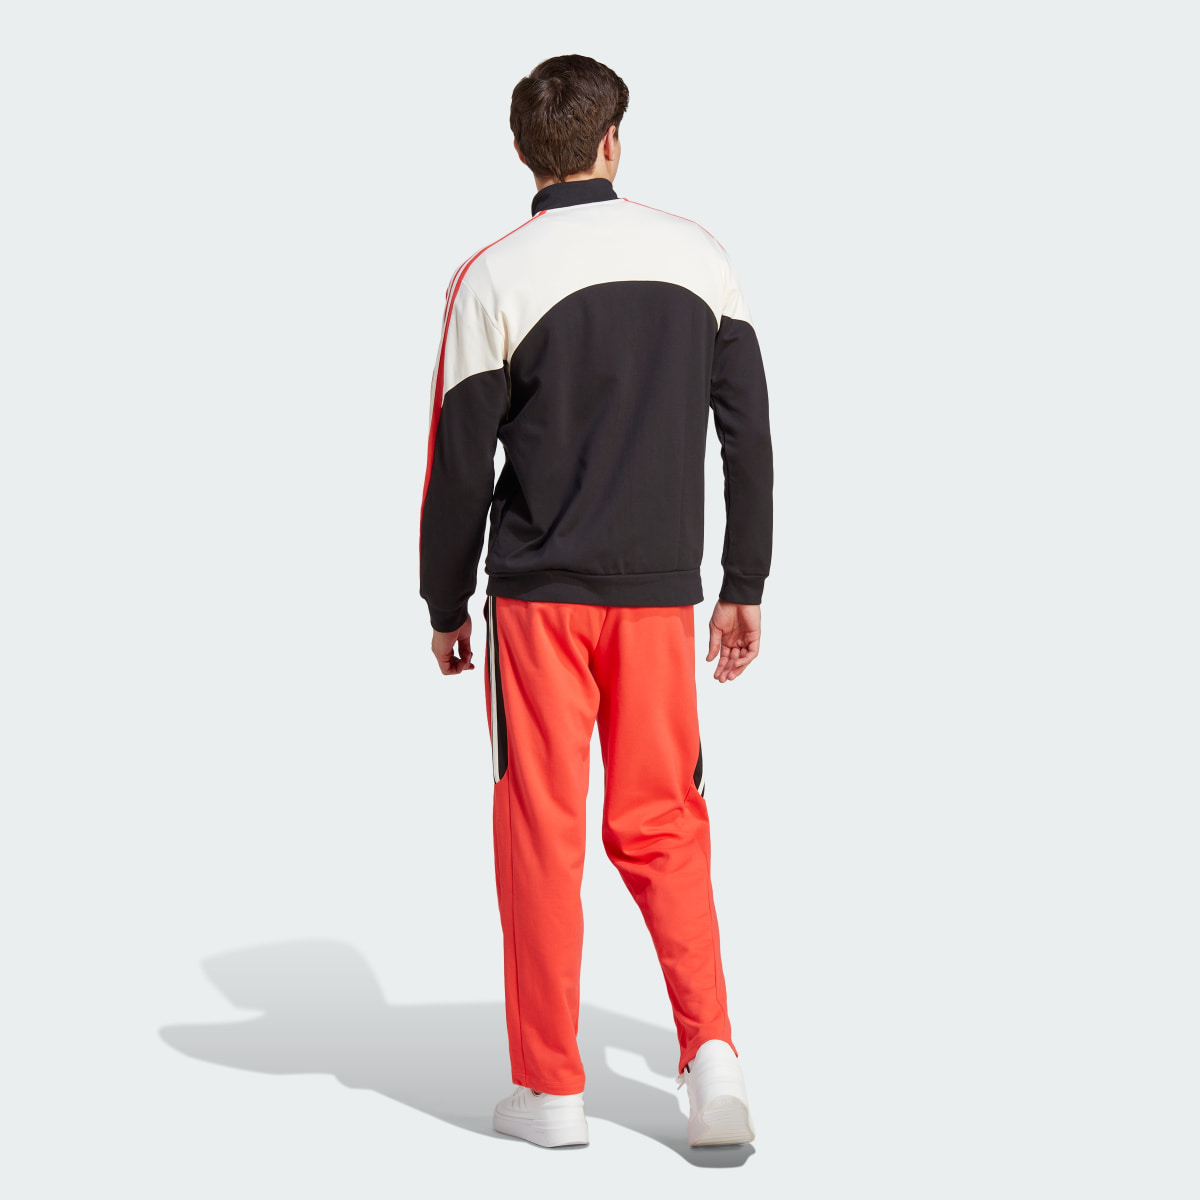 Adidas Track suit Colorblock. 5